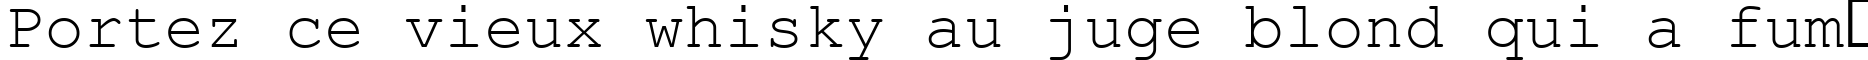 Пример написания шрифтом Rod текста на французском